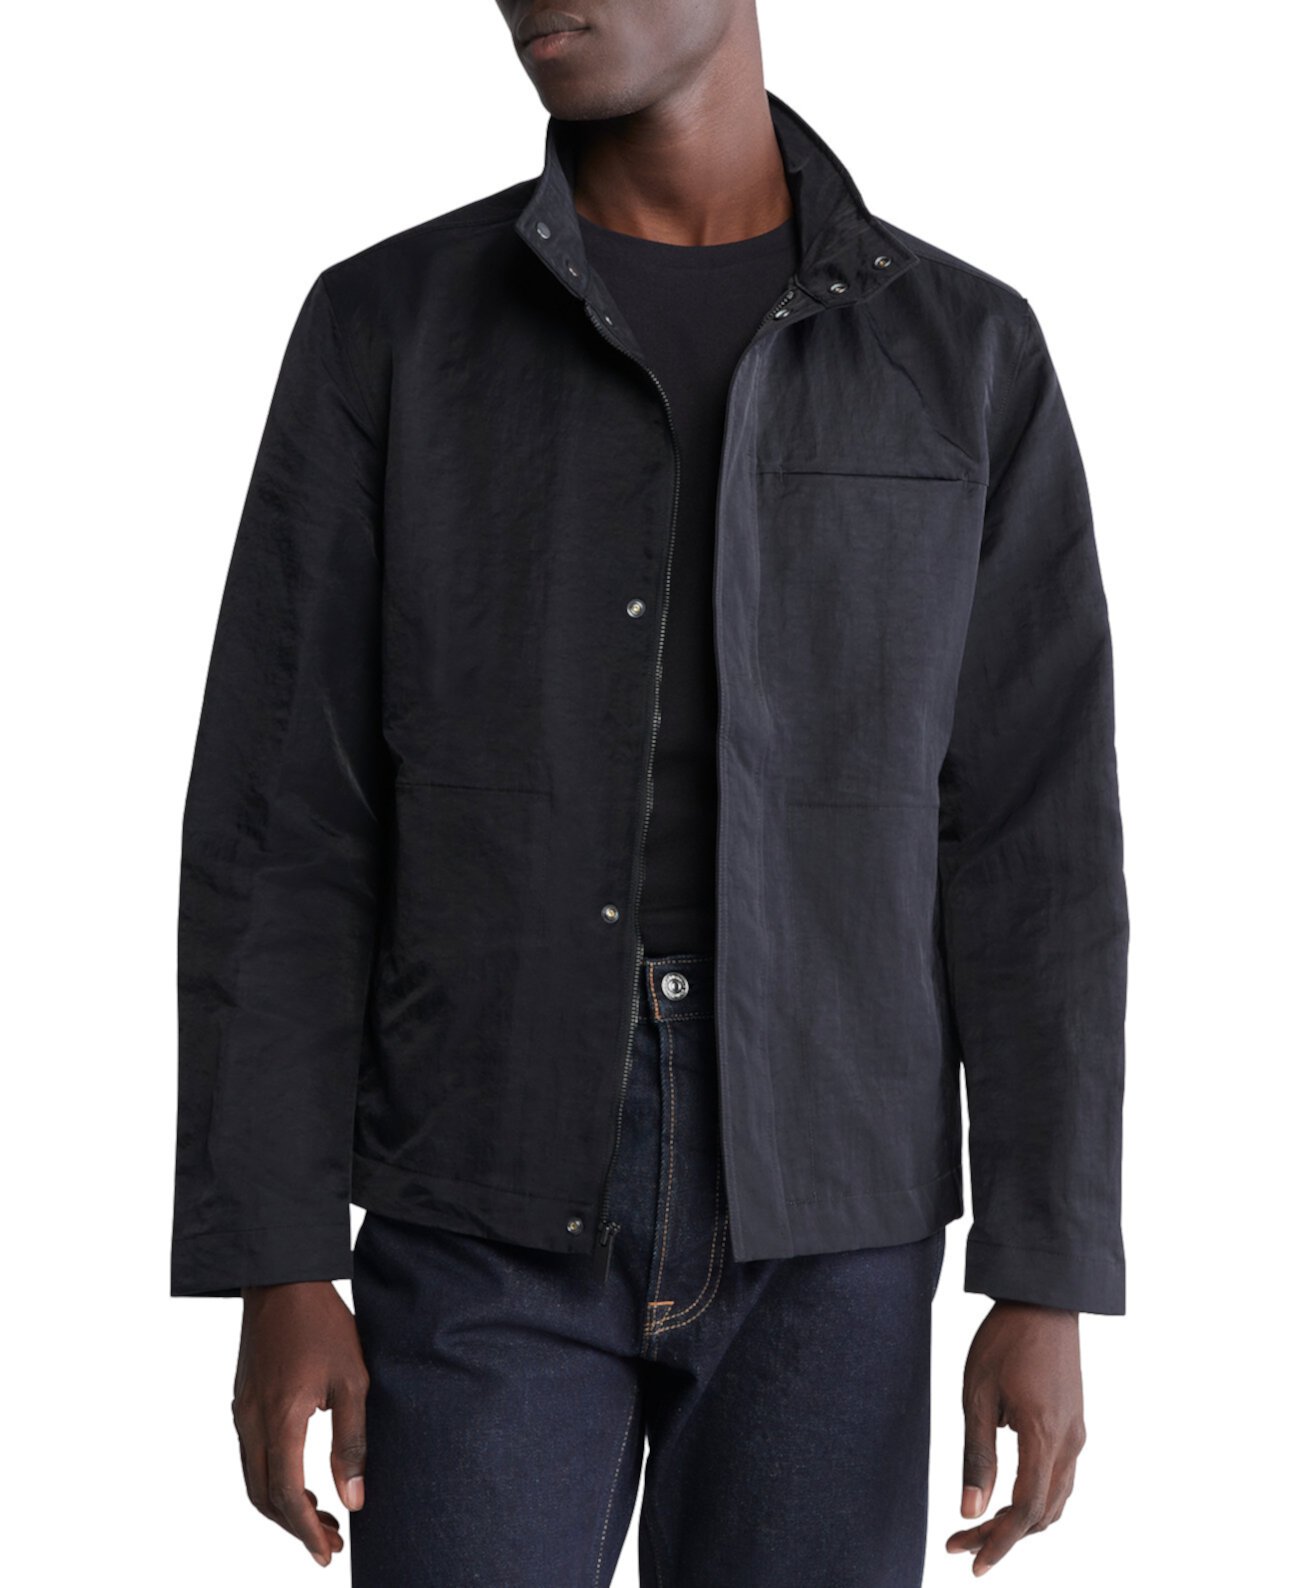 Men's Modern Crinkle Field Jacket Calvin Klein